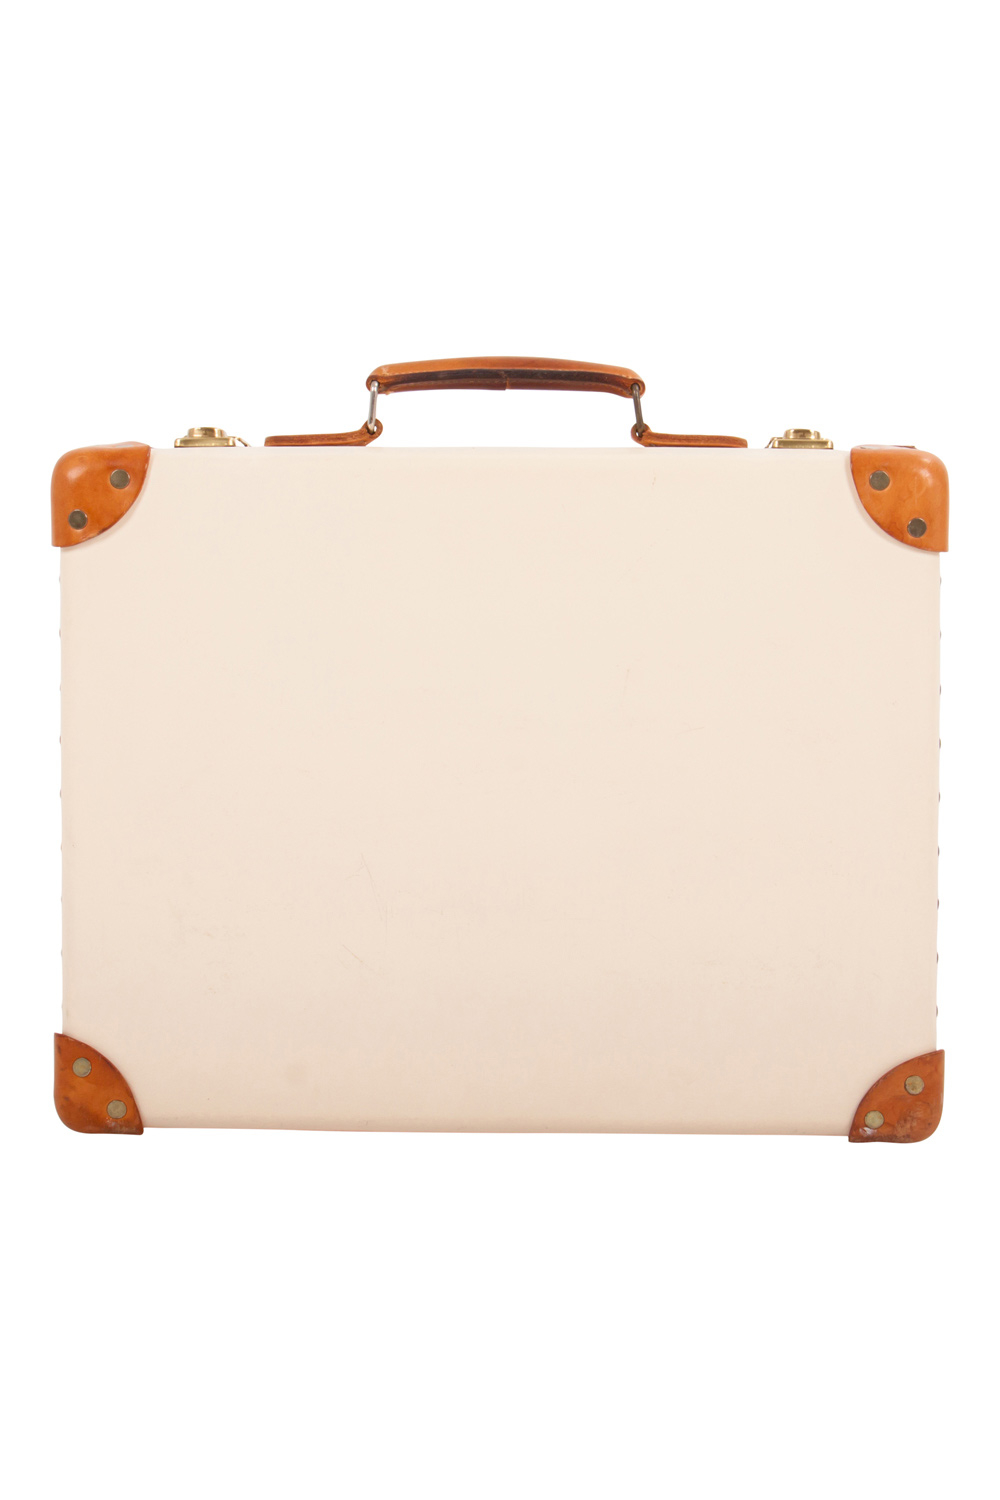 Globe Trotter Cream/Brown Plastic and Leather Safari Air Cabin Case Luggage